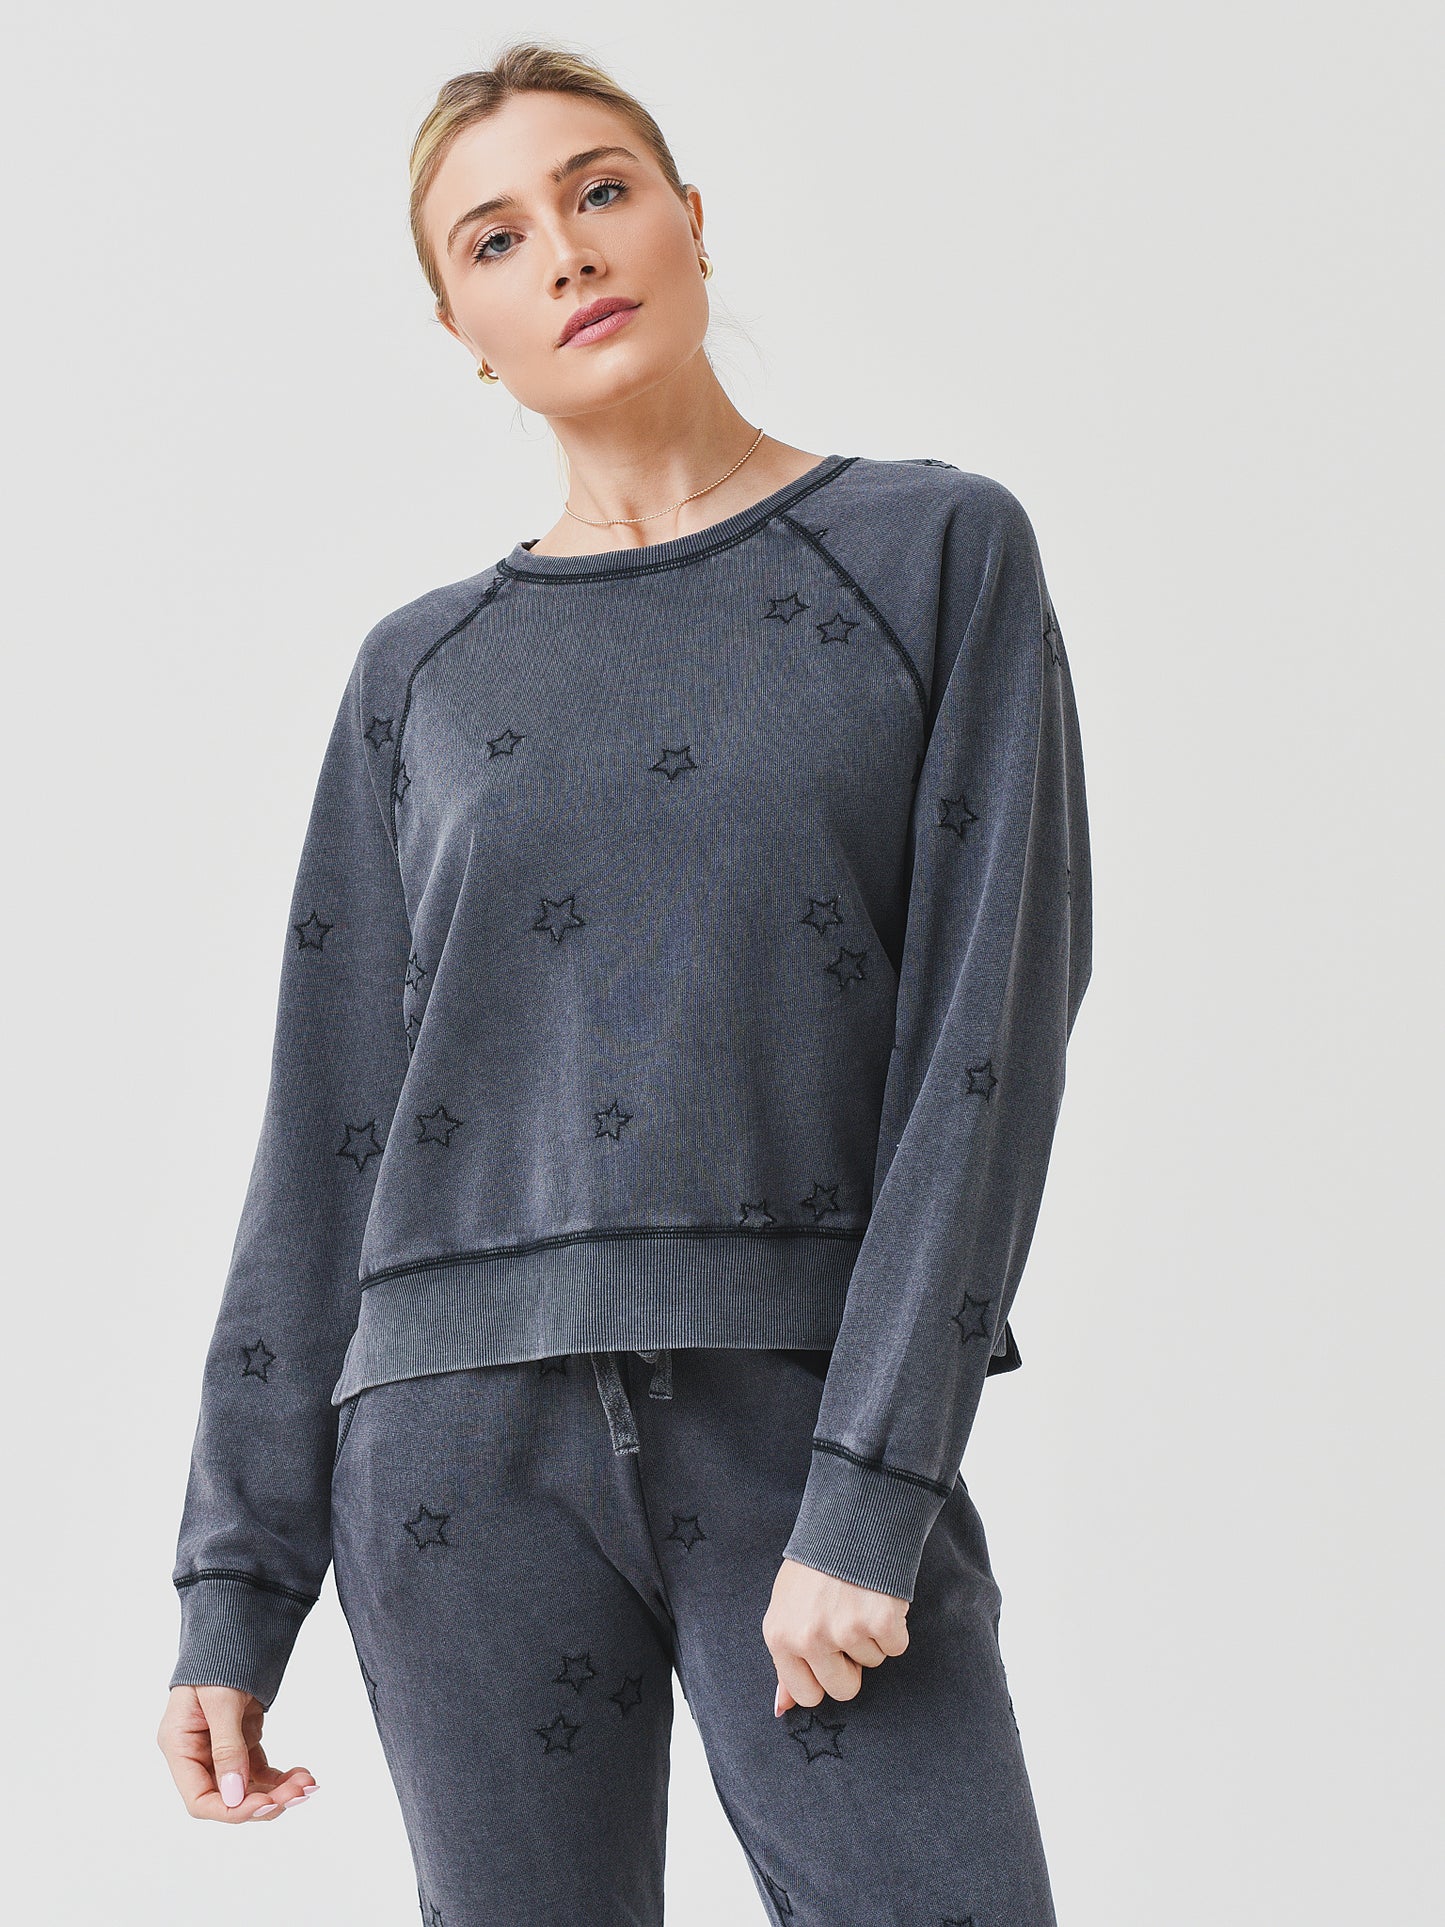 Z Supply Women's Bo Embroidered Star Sweatshirt